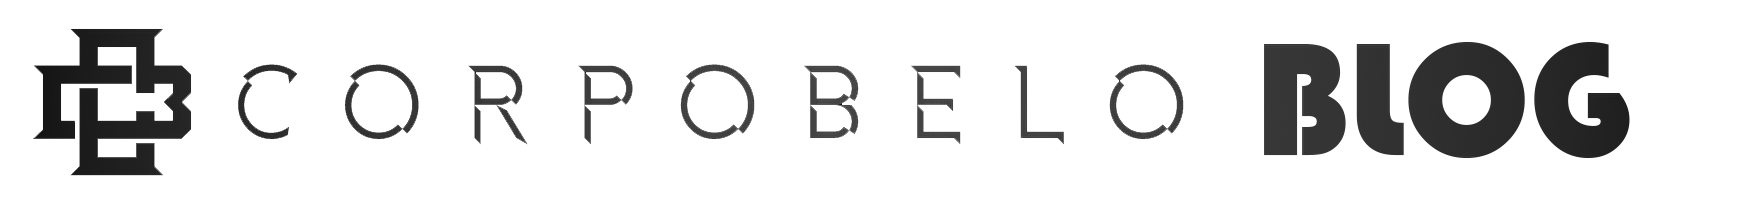 Logo-escura-blog-horizontal